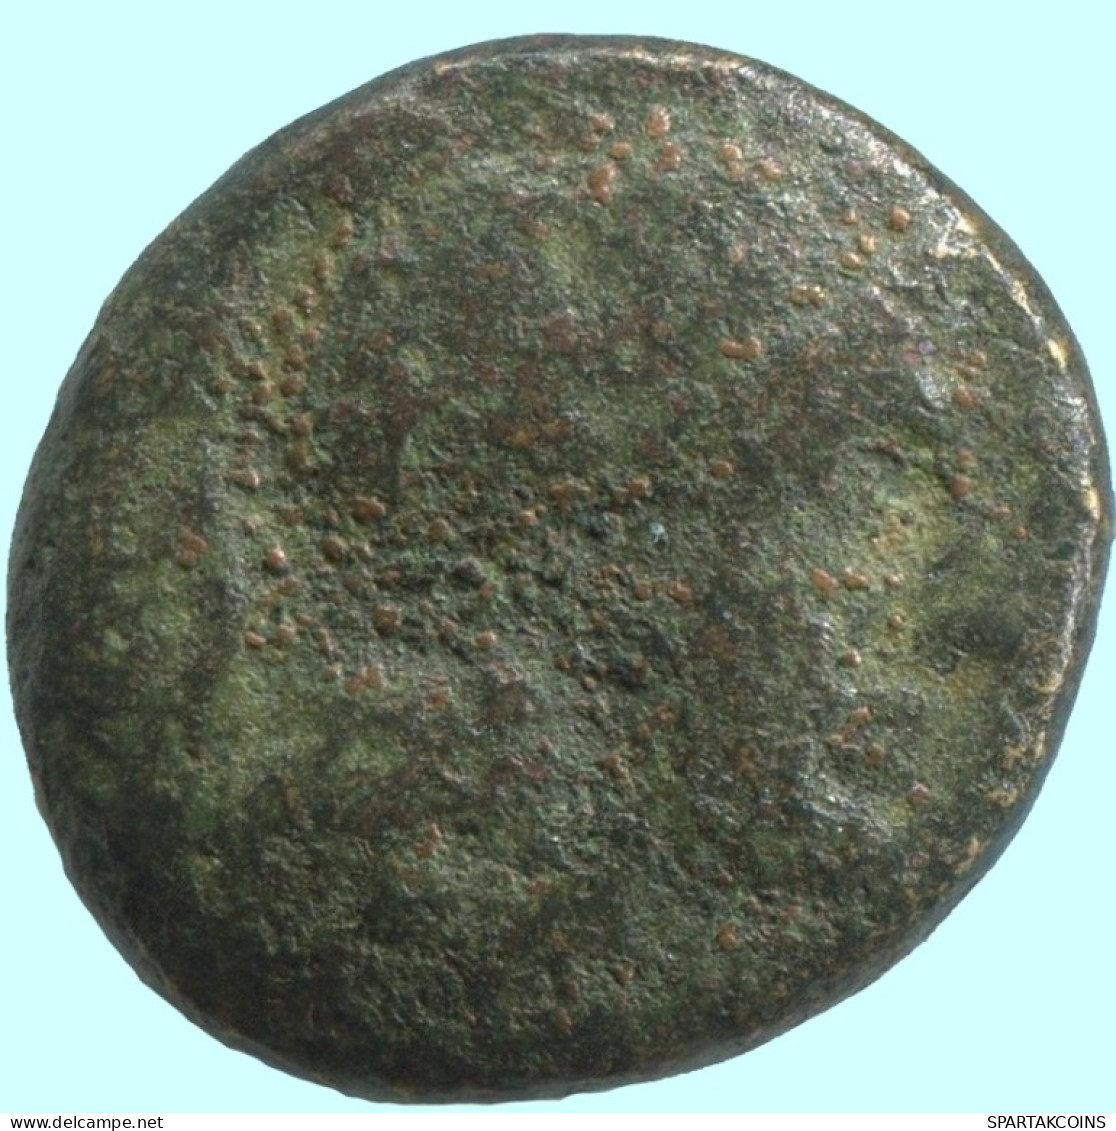 LION Antiguo Auténtico Original GRIEGO Moneda 4.1g/16mm #ANT1773.10.E.A - Griegas